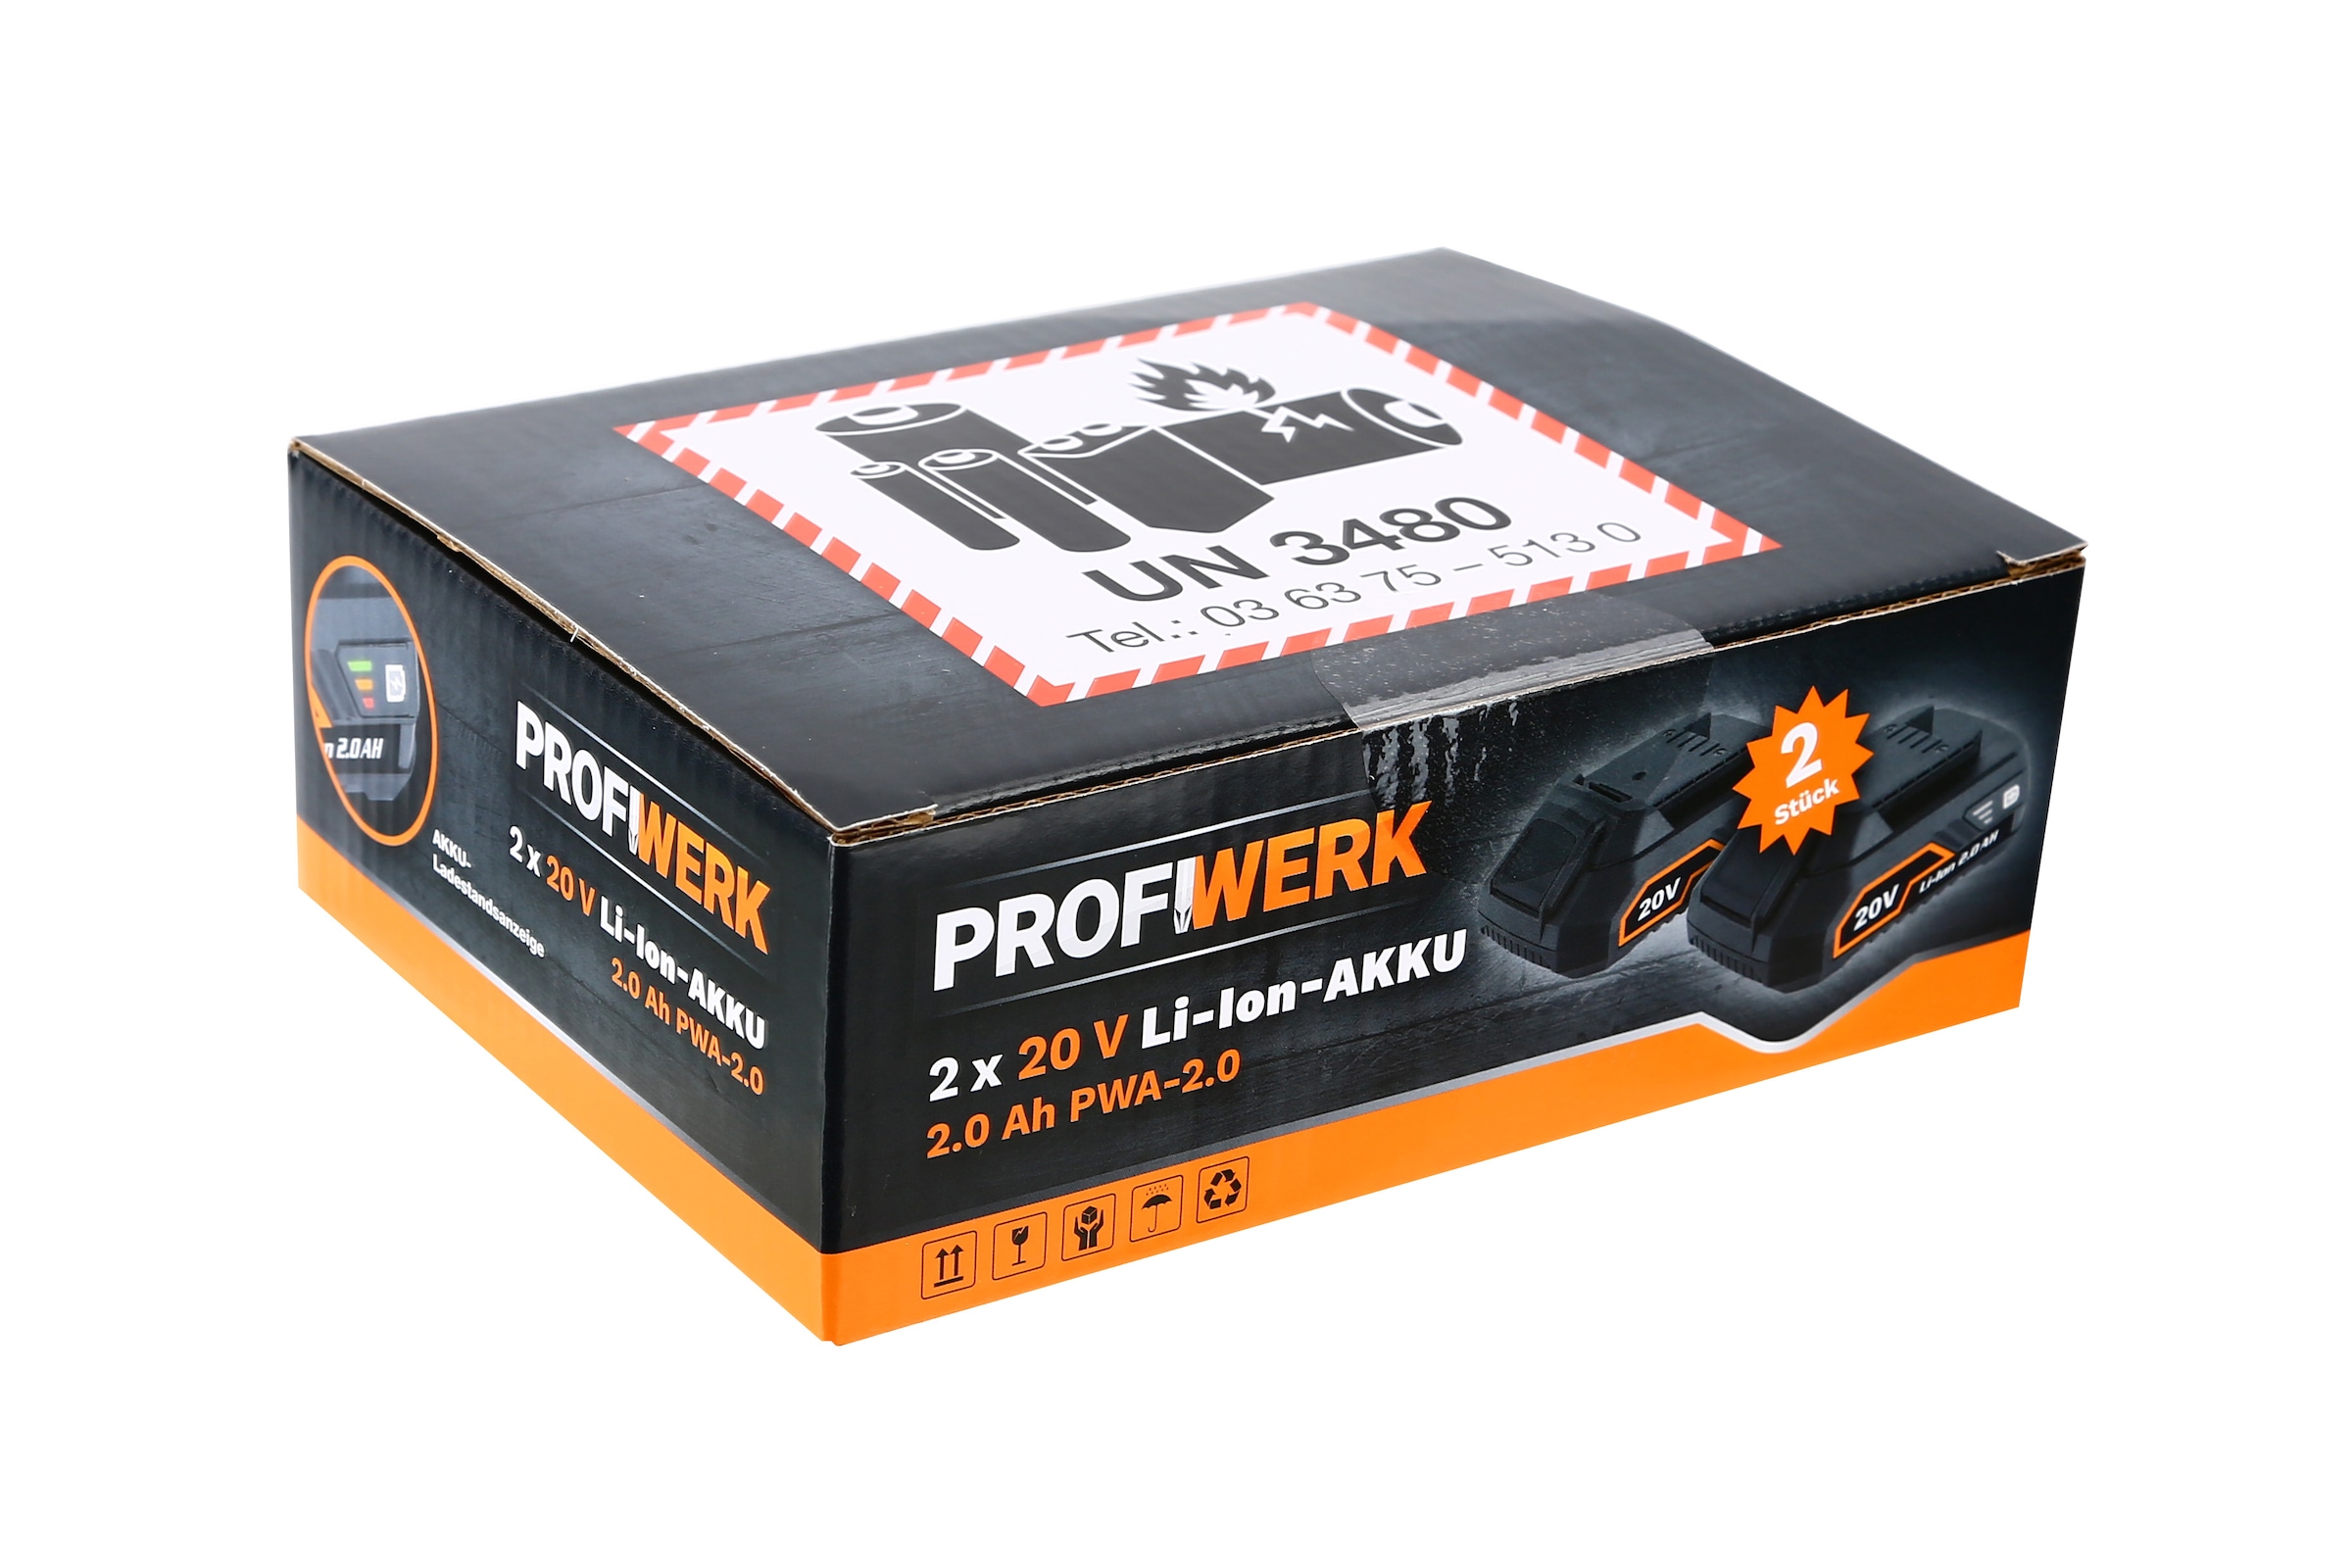 Profiwerk Akkupacks 2.0Ah 20V, per | PWA-2.0x2« BAUR Rechnung 2x »Akku-Pack